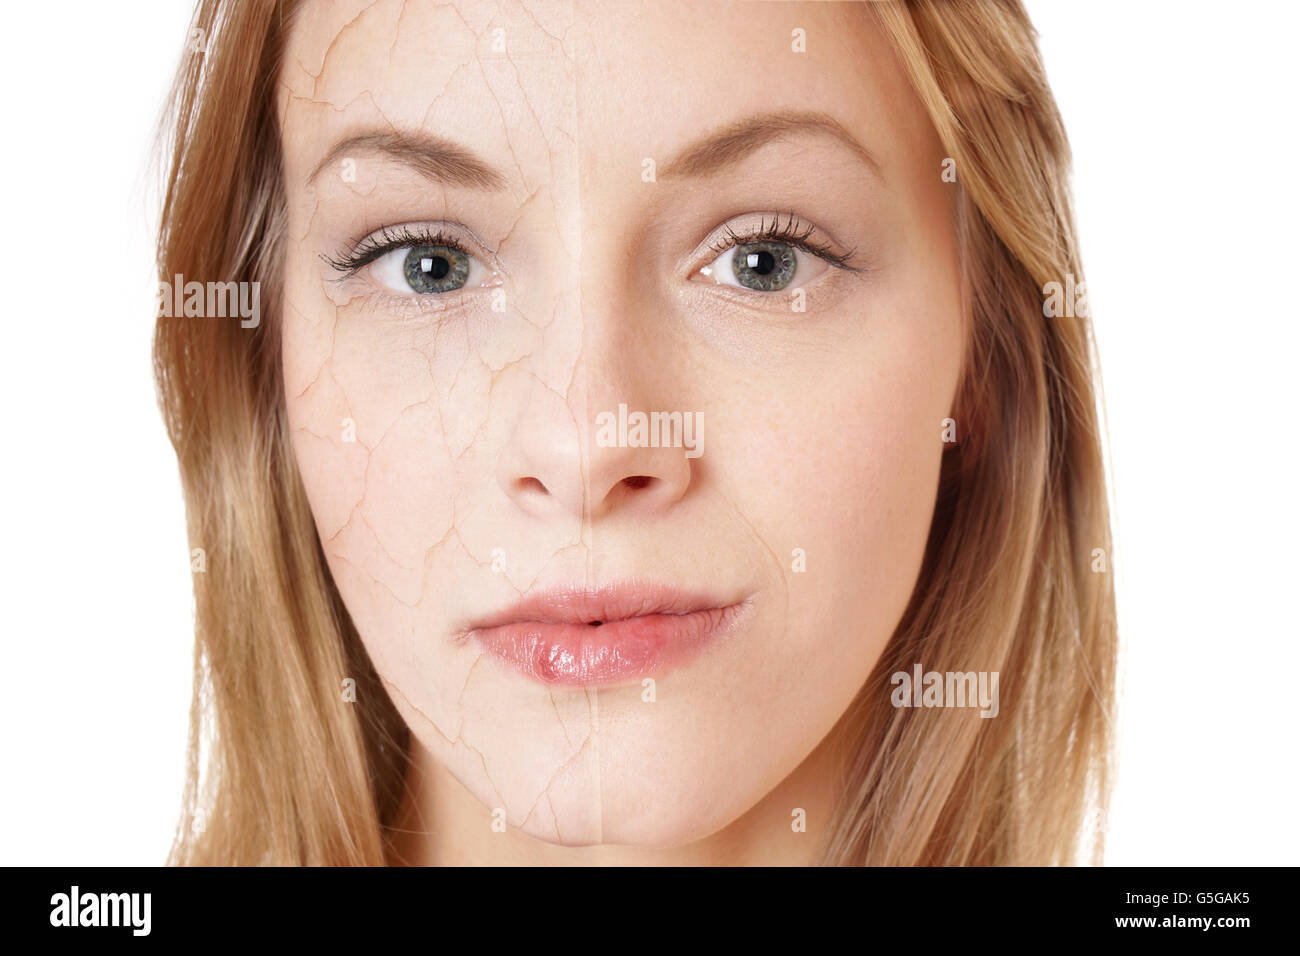 skin rejuvenation concept Stock Photo